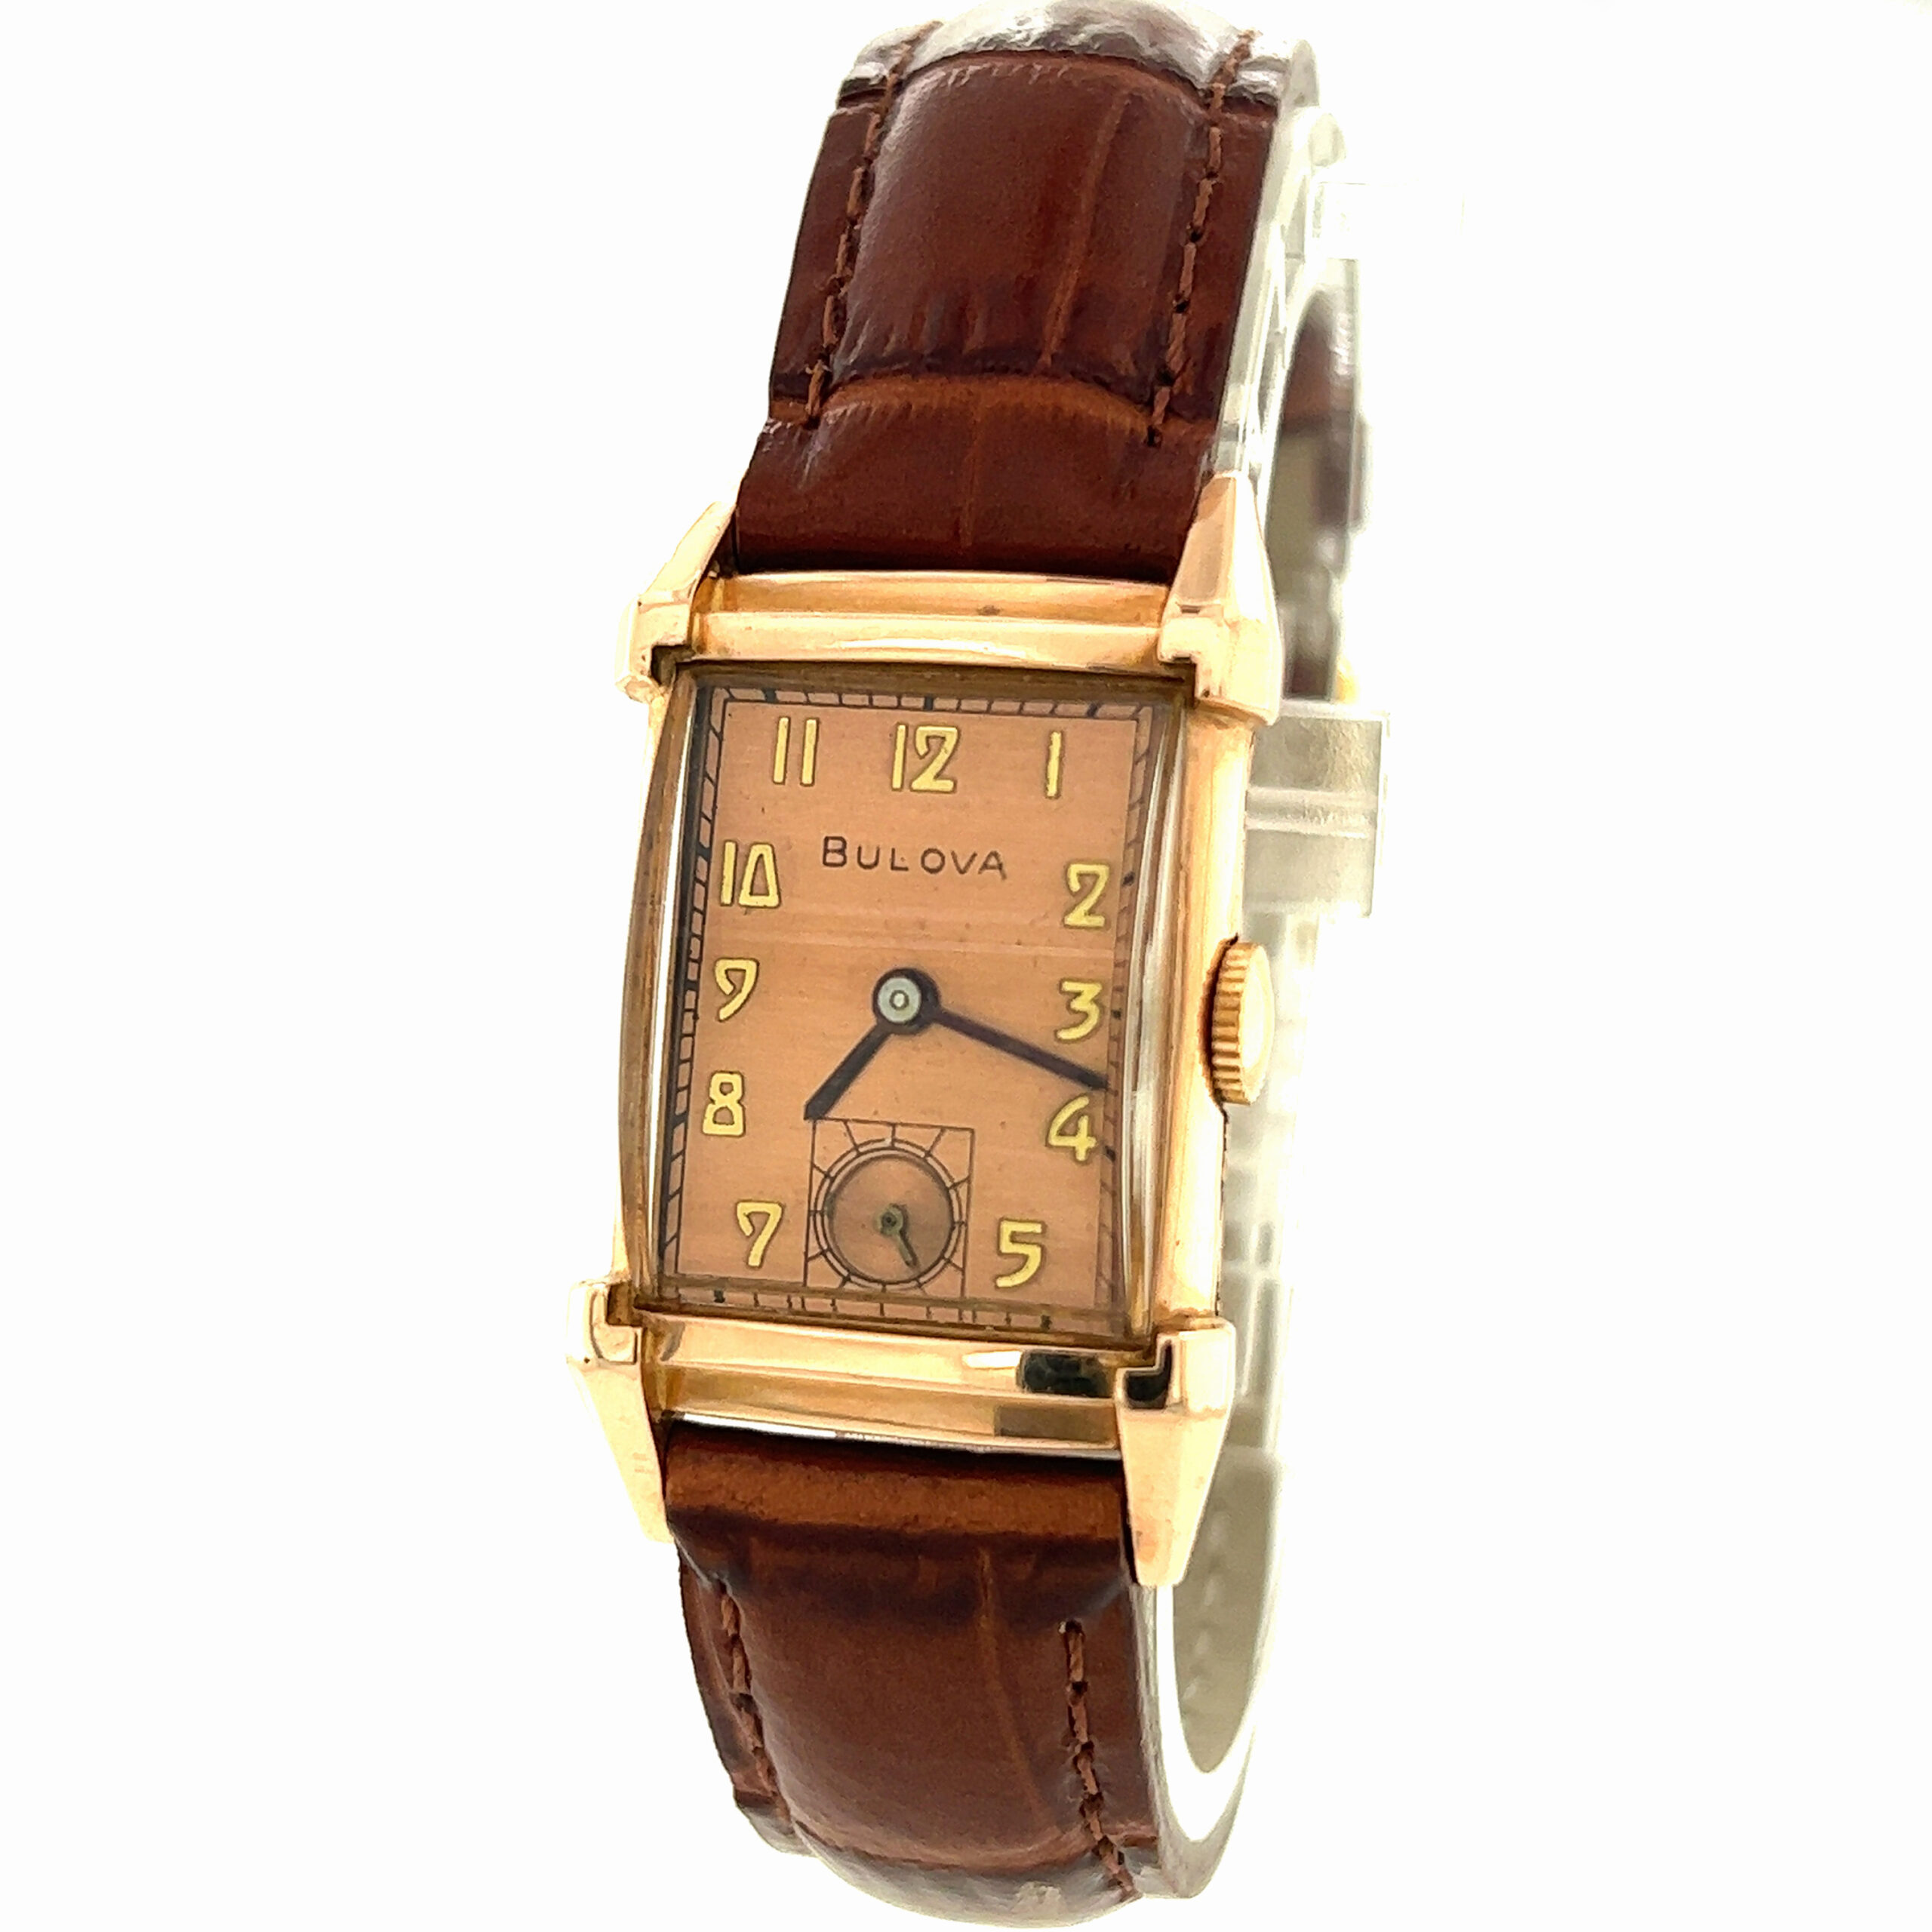 Bulova Vintage Men's Wrist Watch 1940's